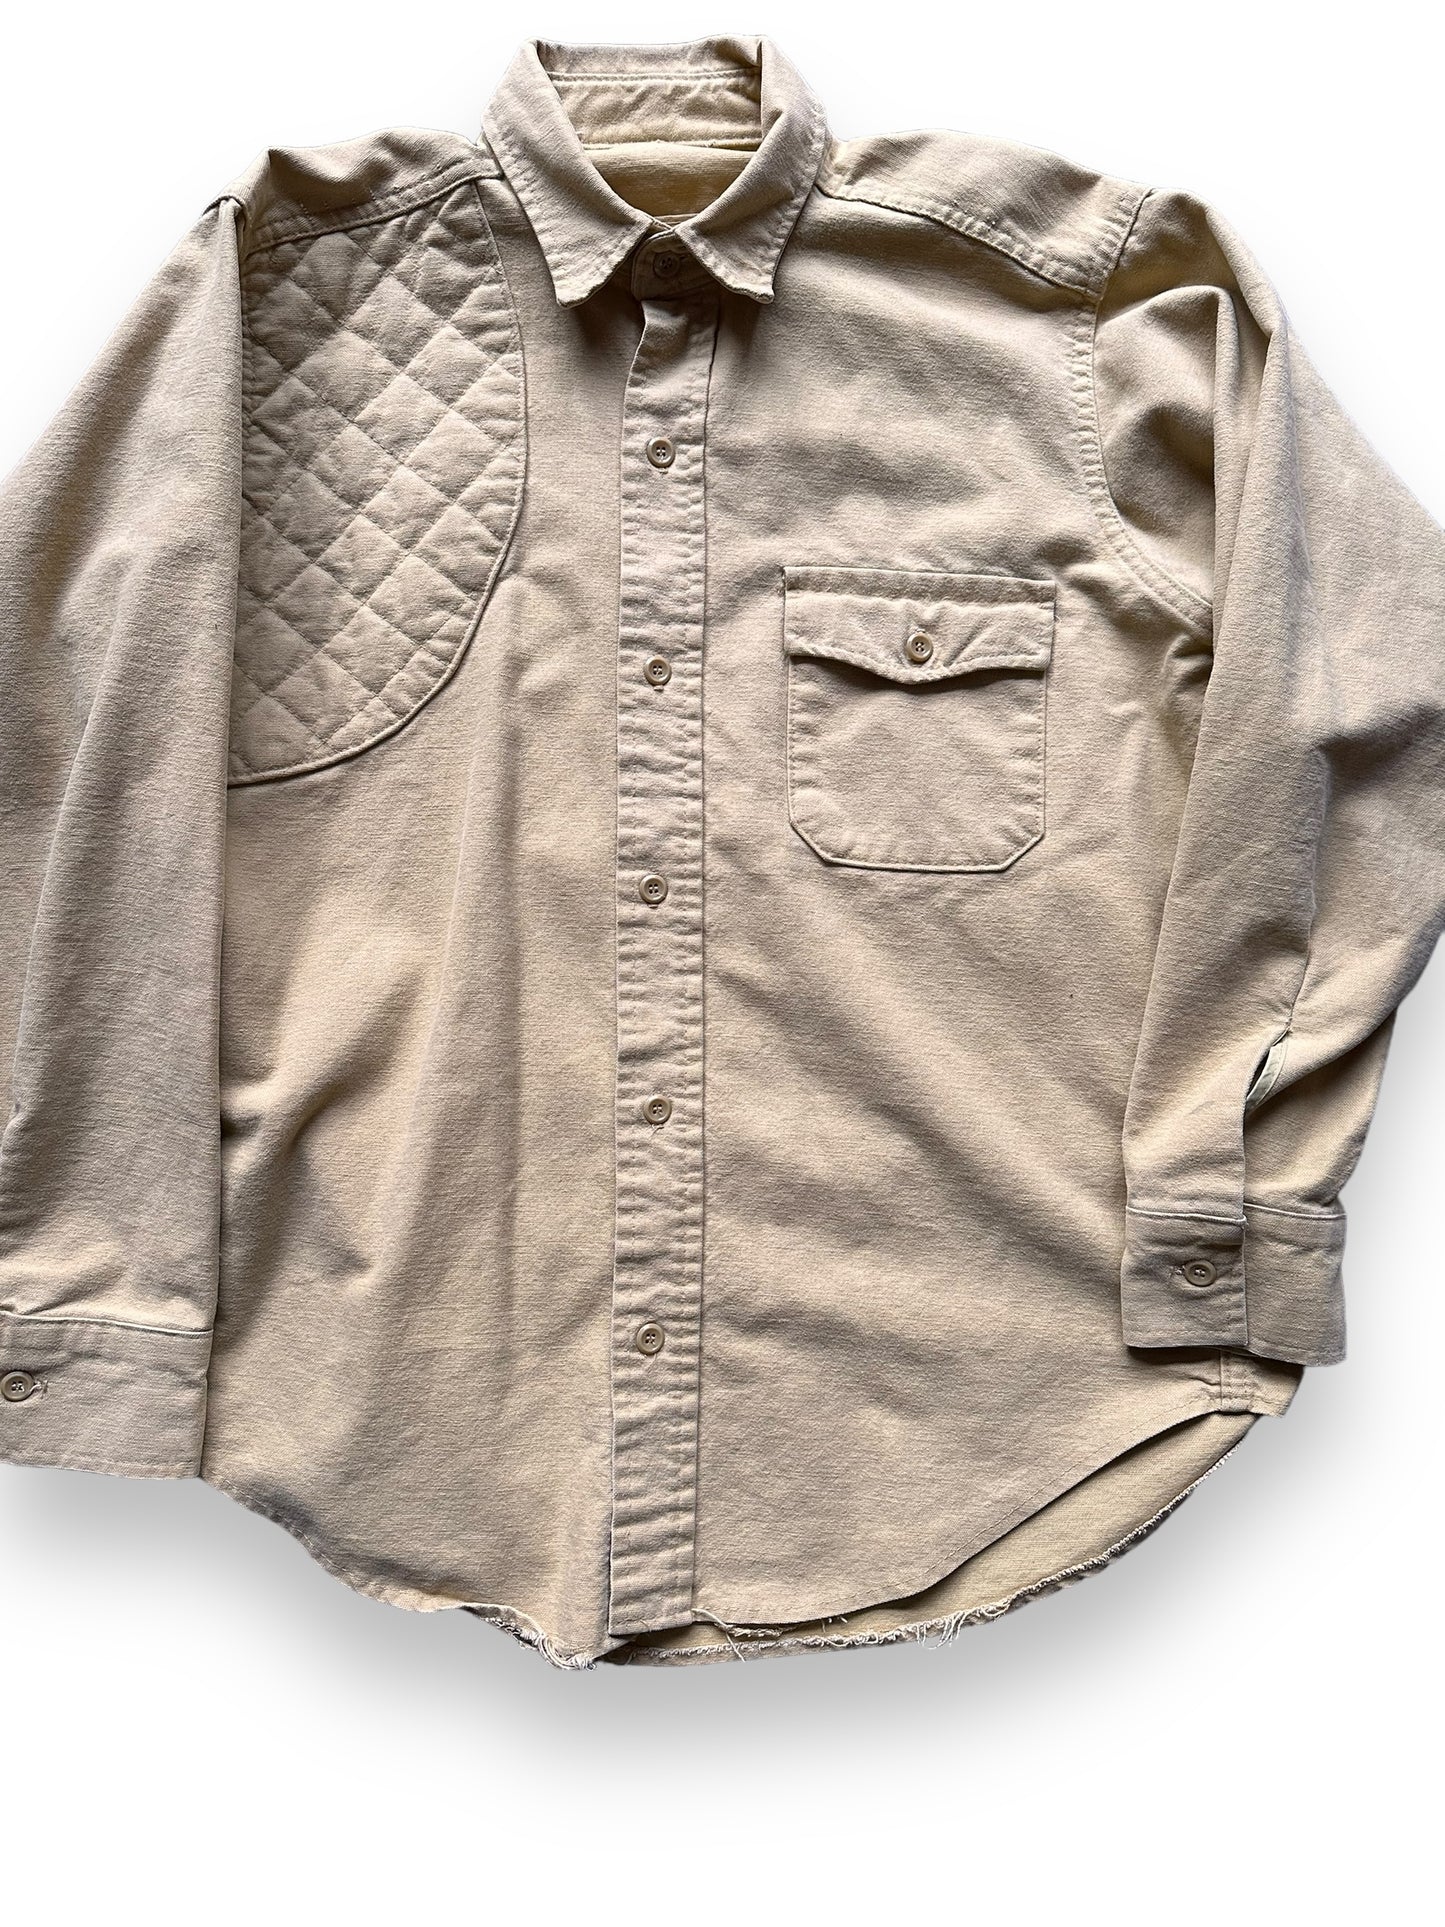 Front Detail on Vintage Chamois Shooting Shirt SZ L |  Barn Owl Vintage Goods | Vintage Workwear Seattle